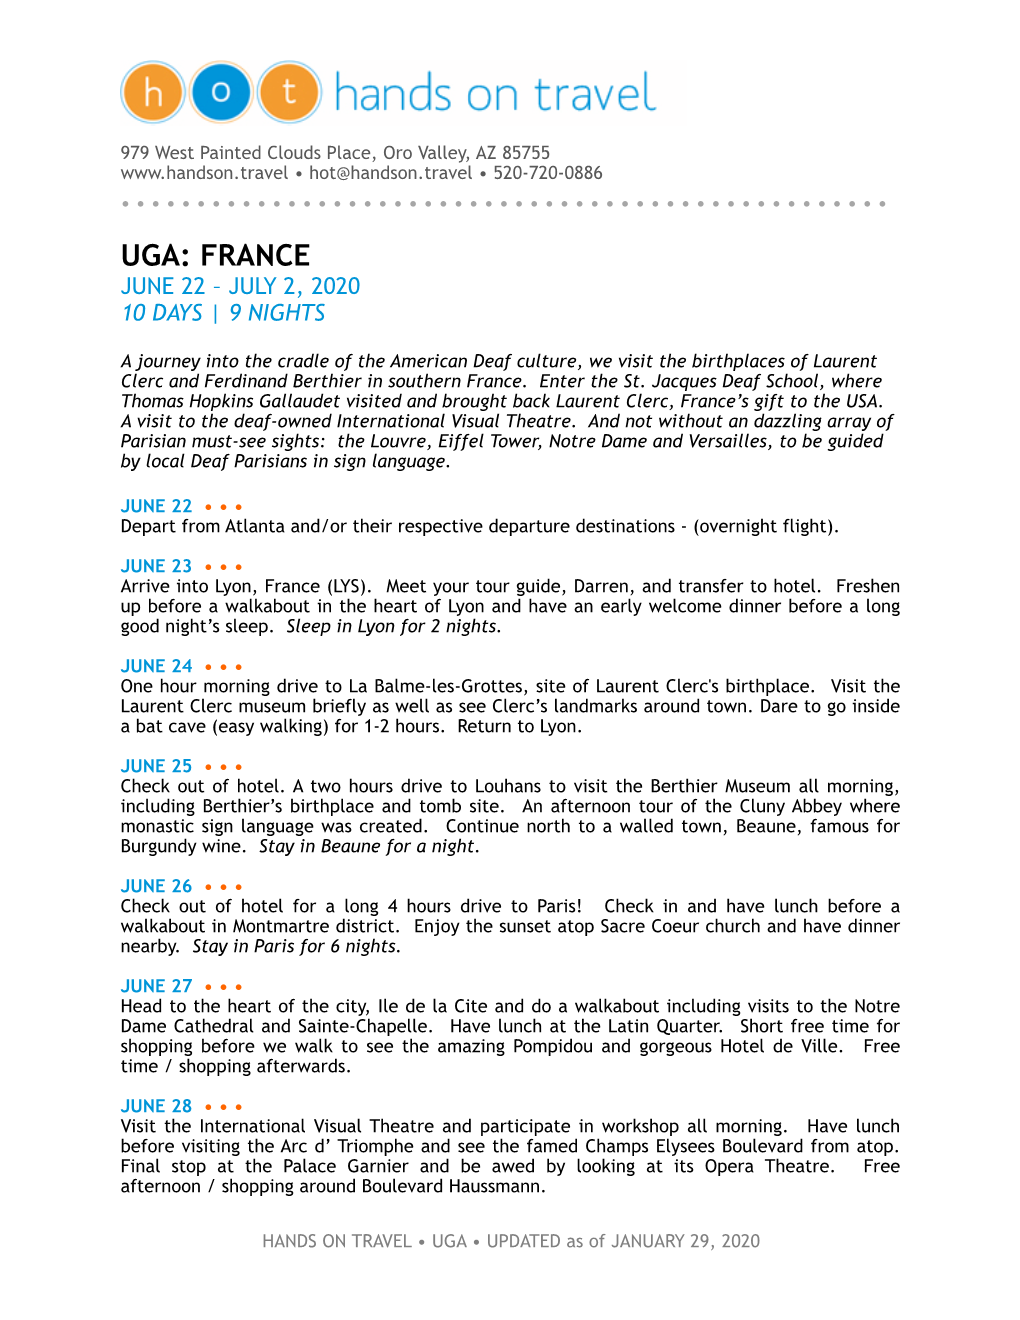 2020 UGA France Updated